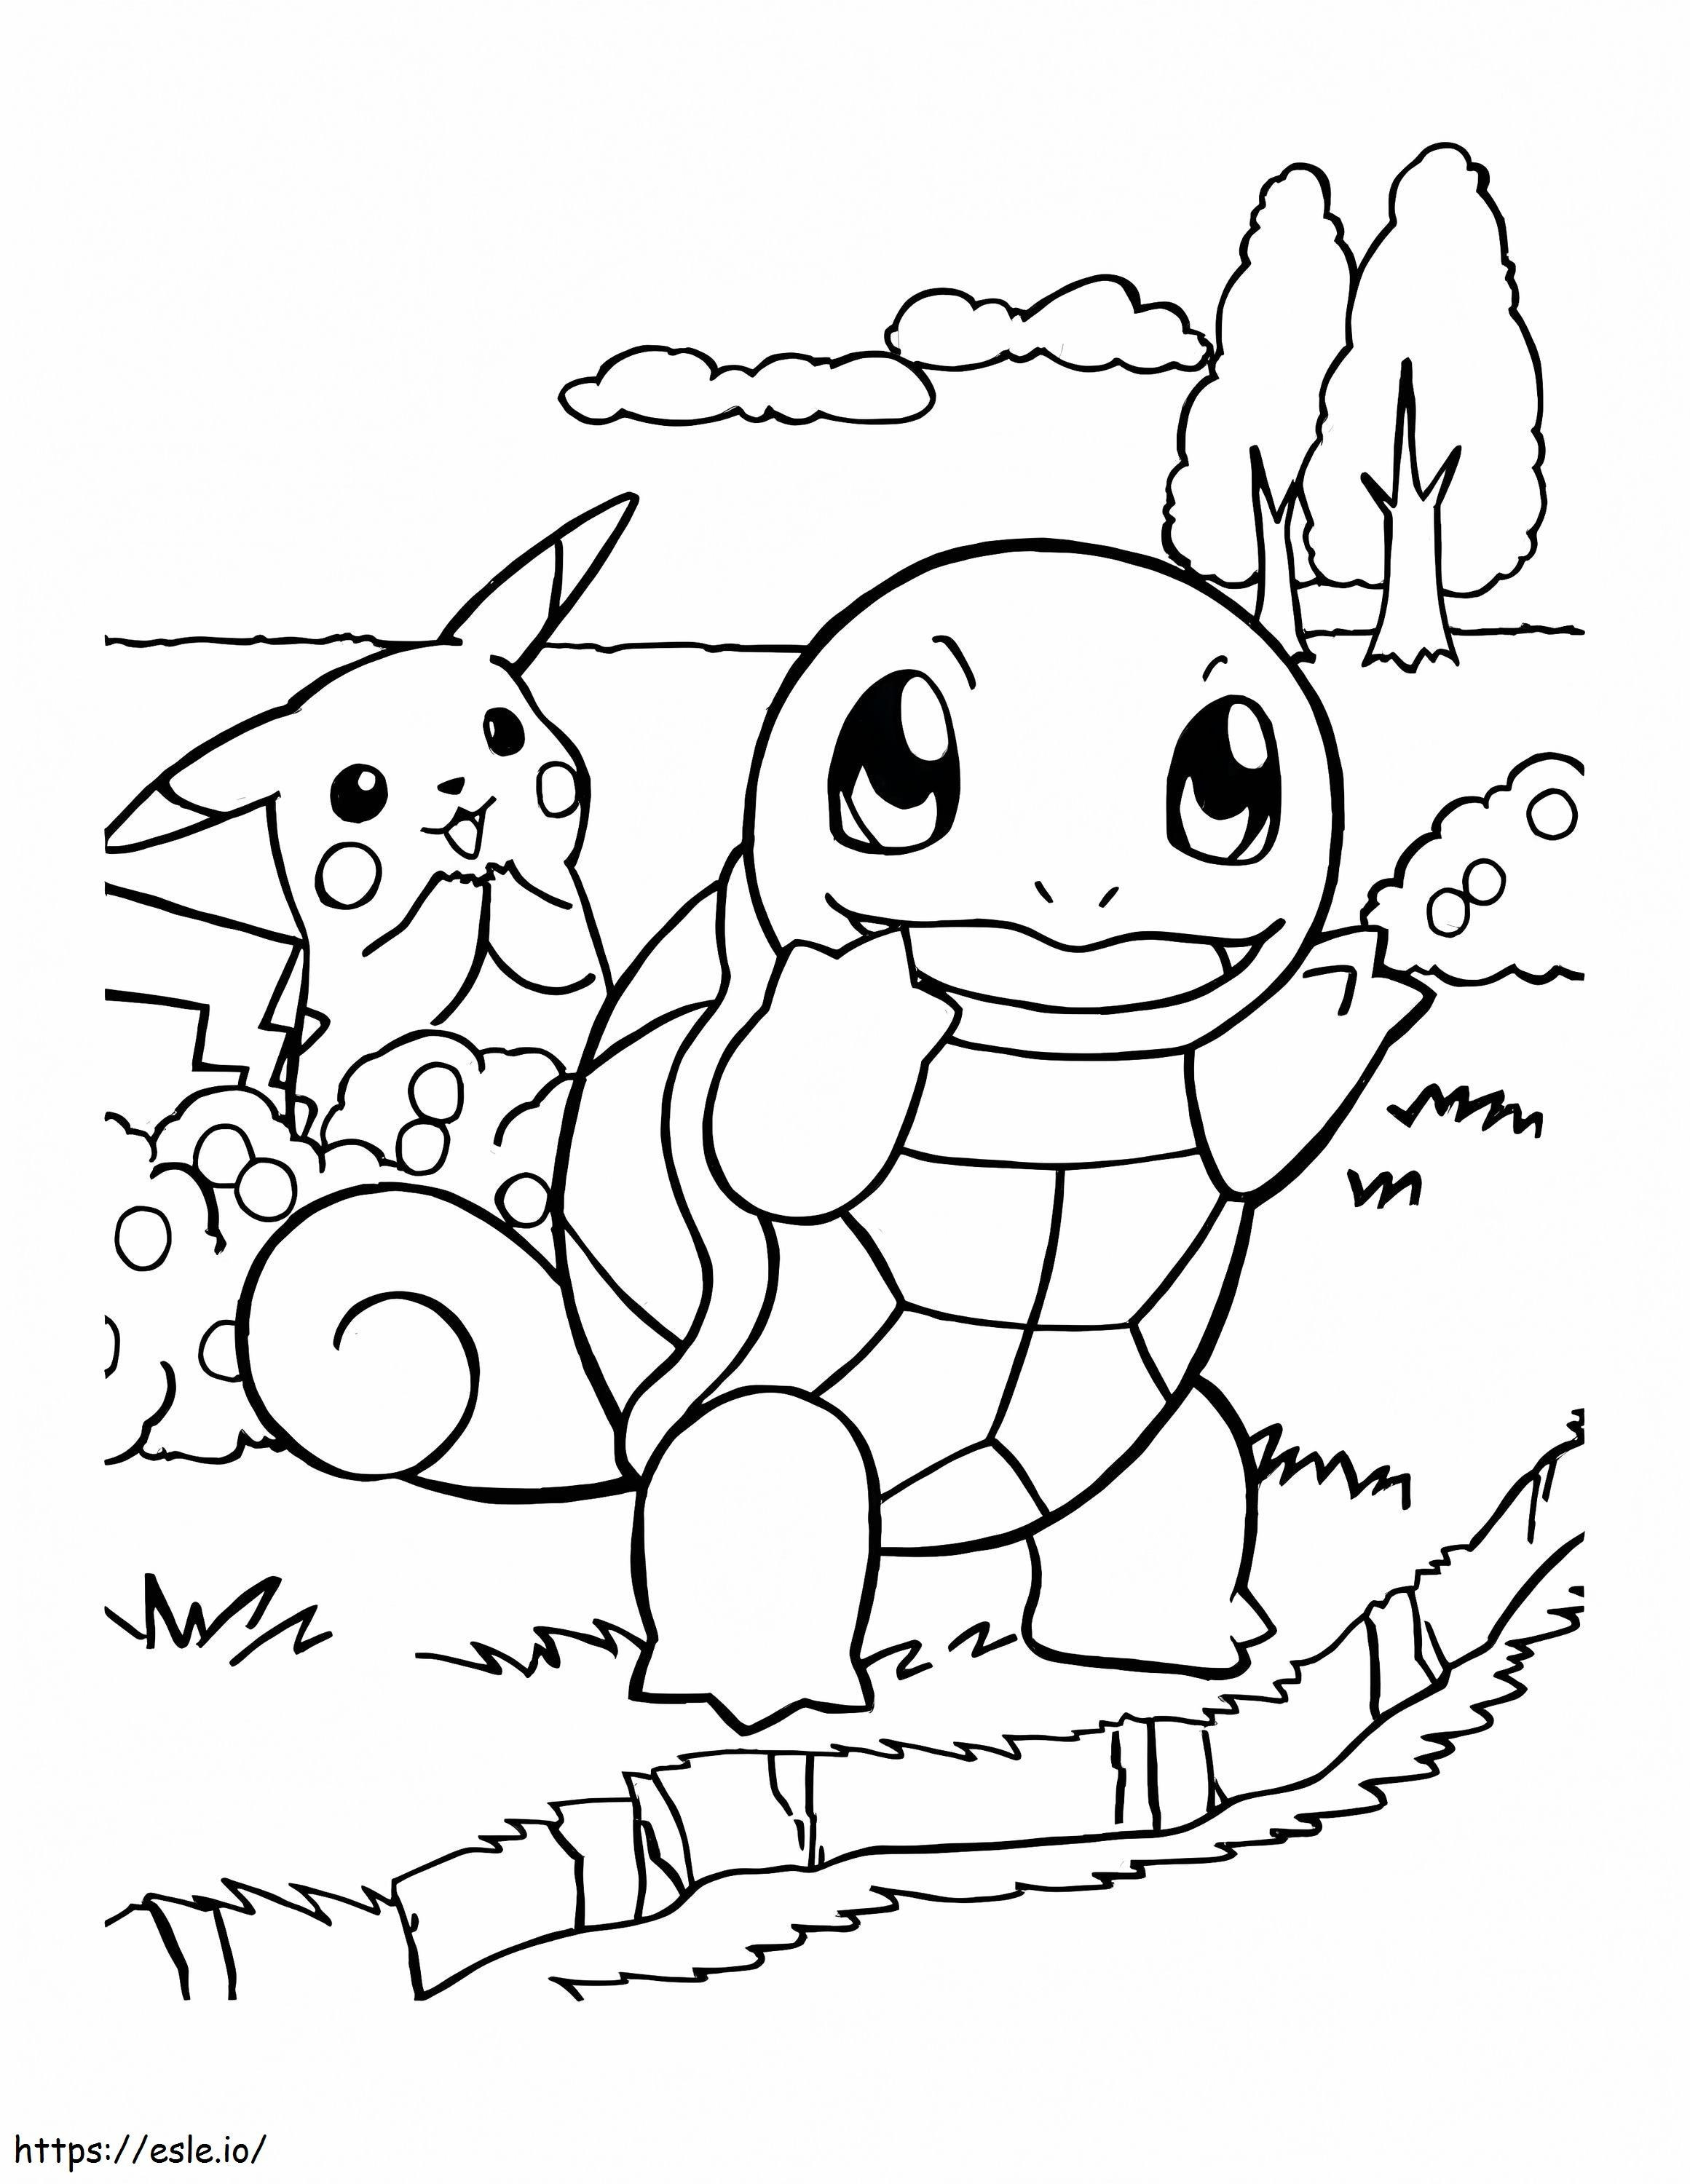 Pikachu e Squirtle para colorir